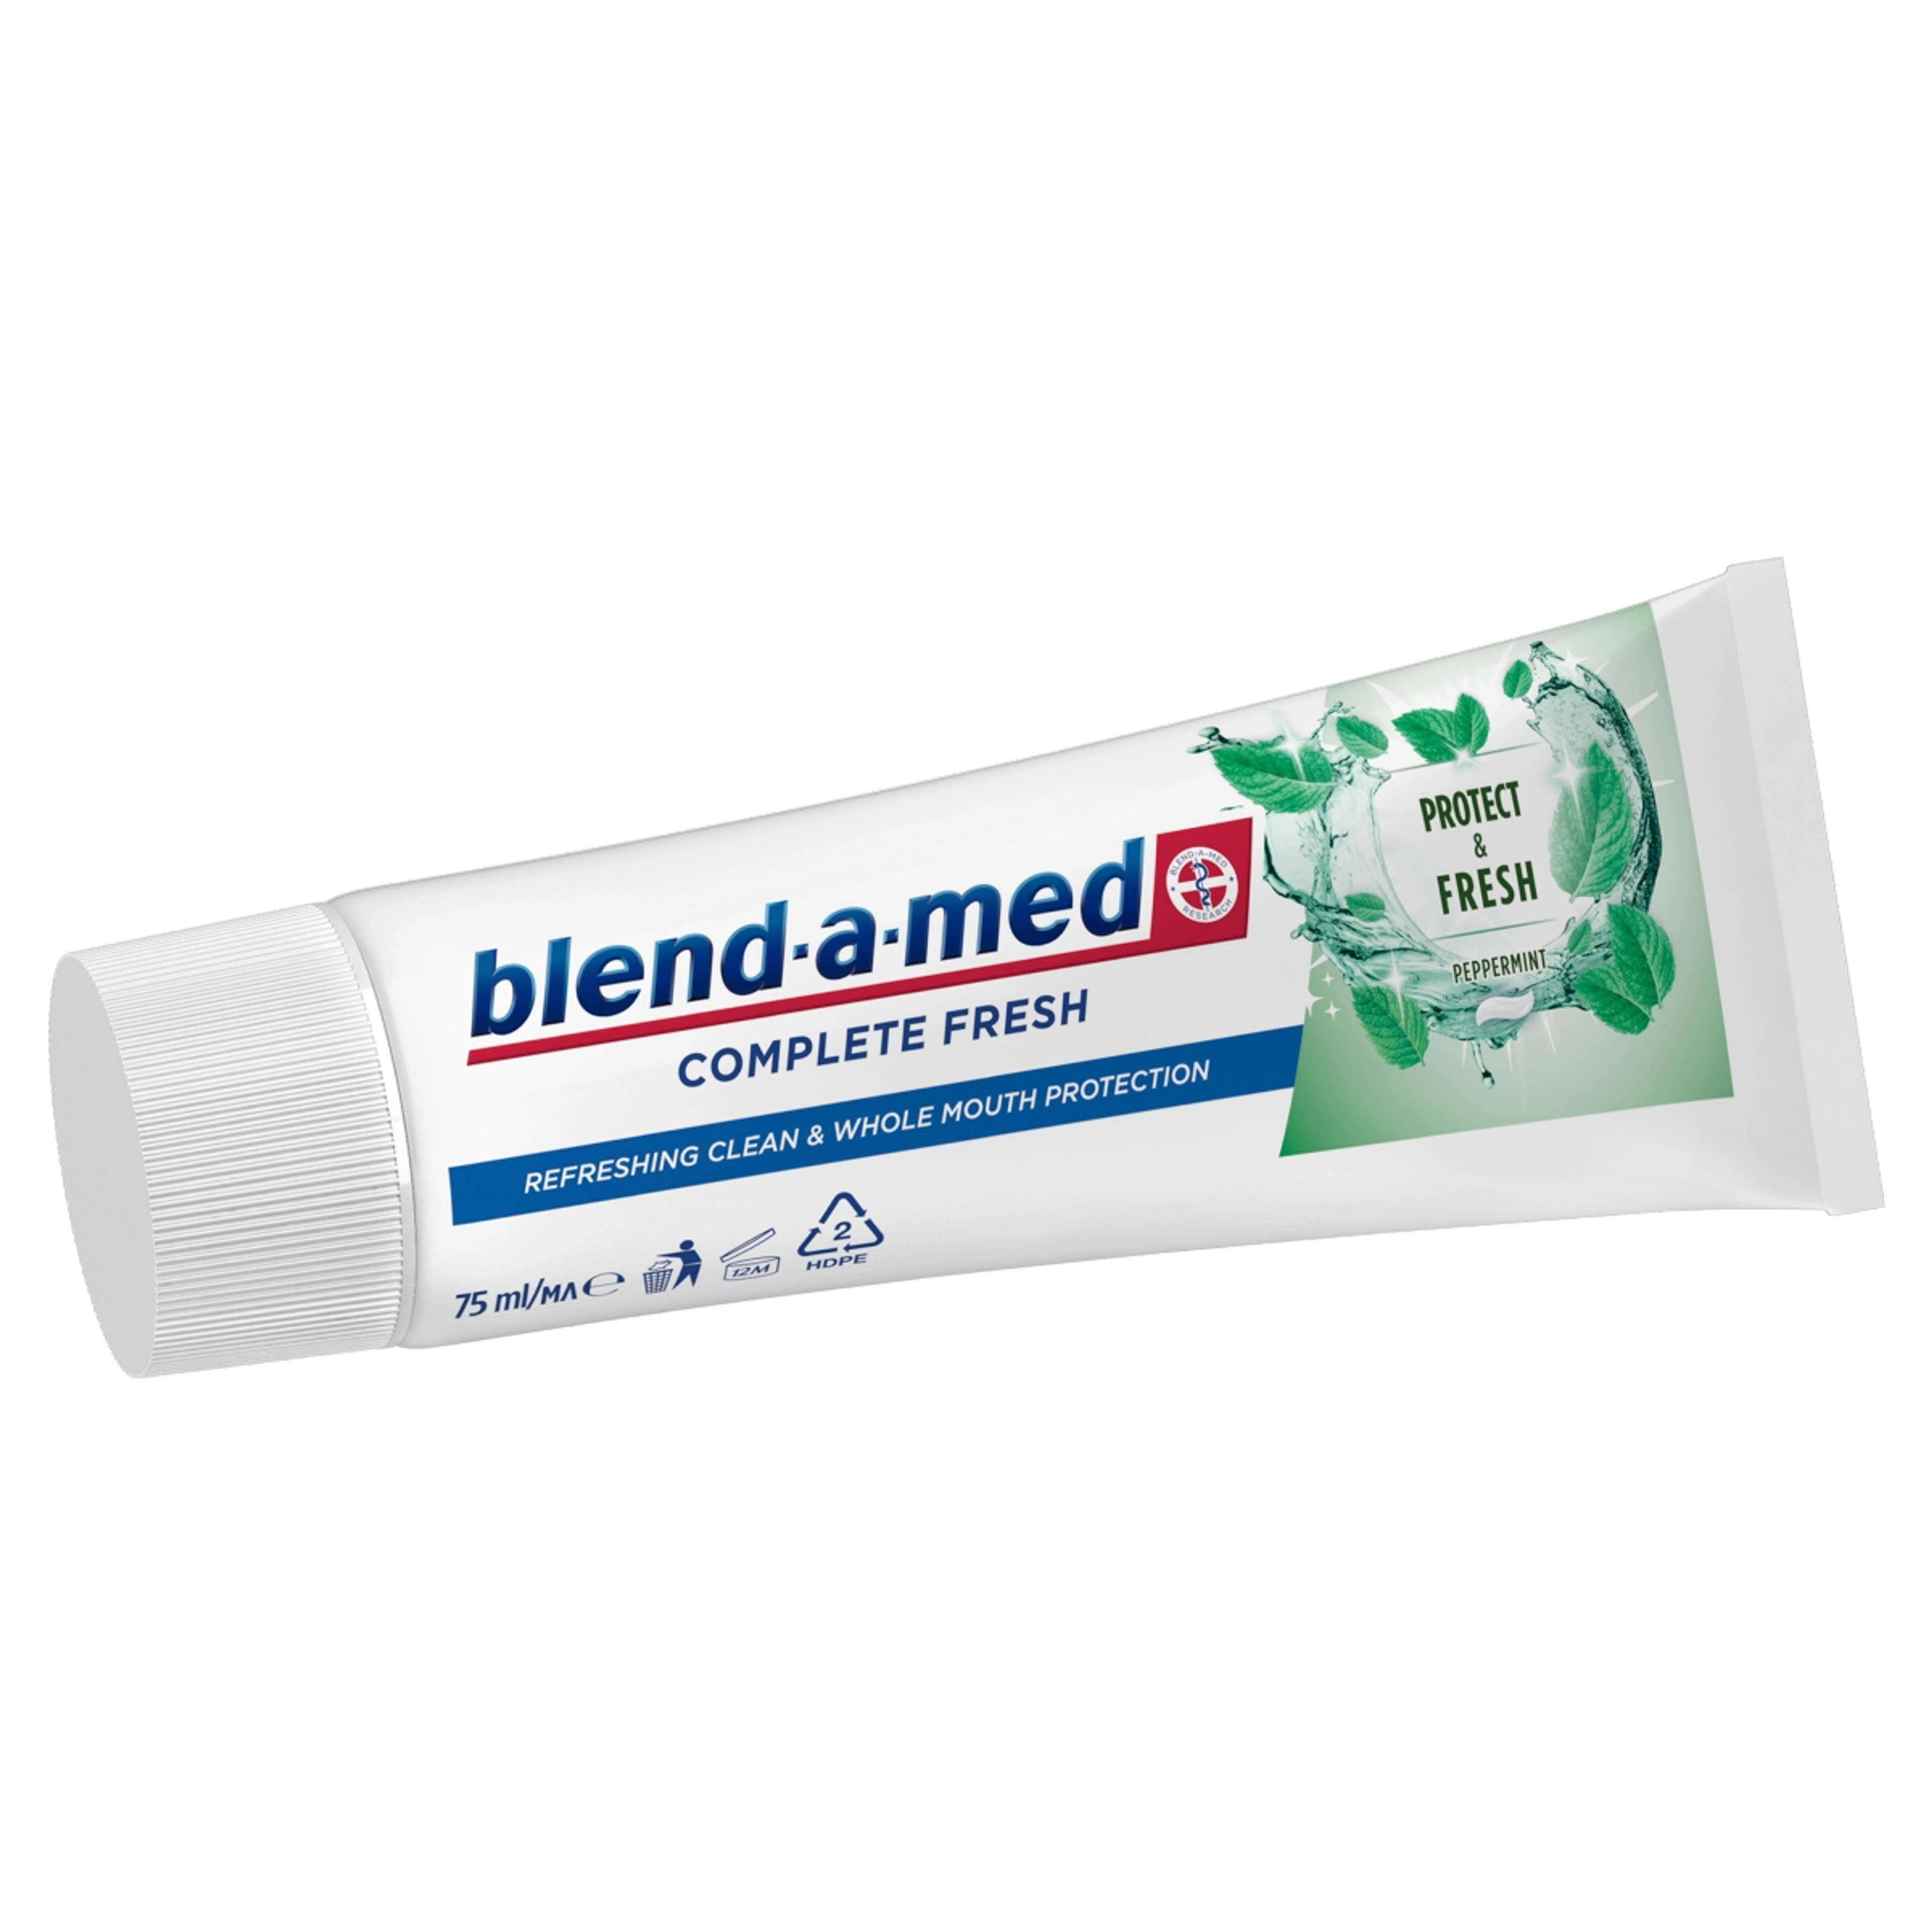 Blend-a-med Complete Fresh Protect & Fresh fogkrém - 75 ml-4